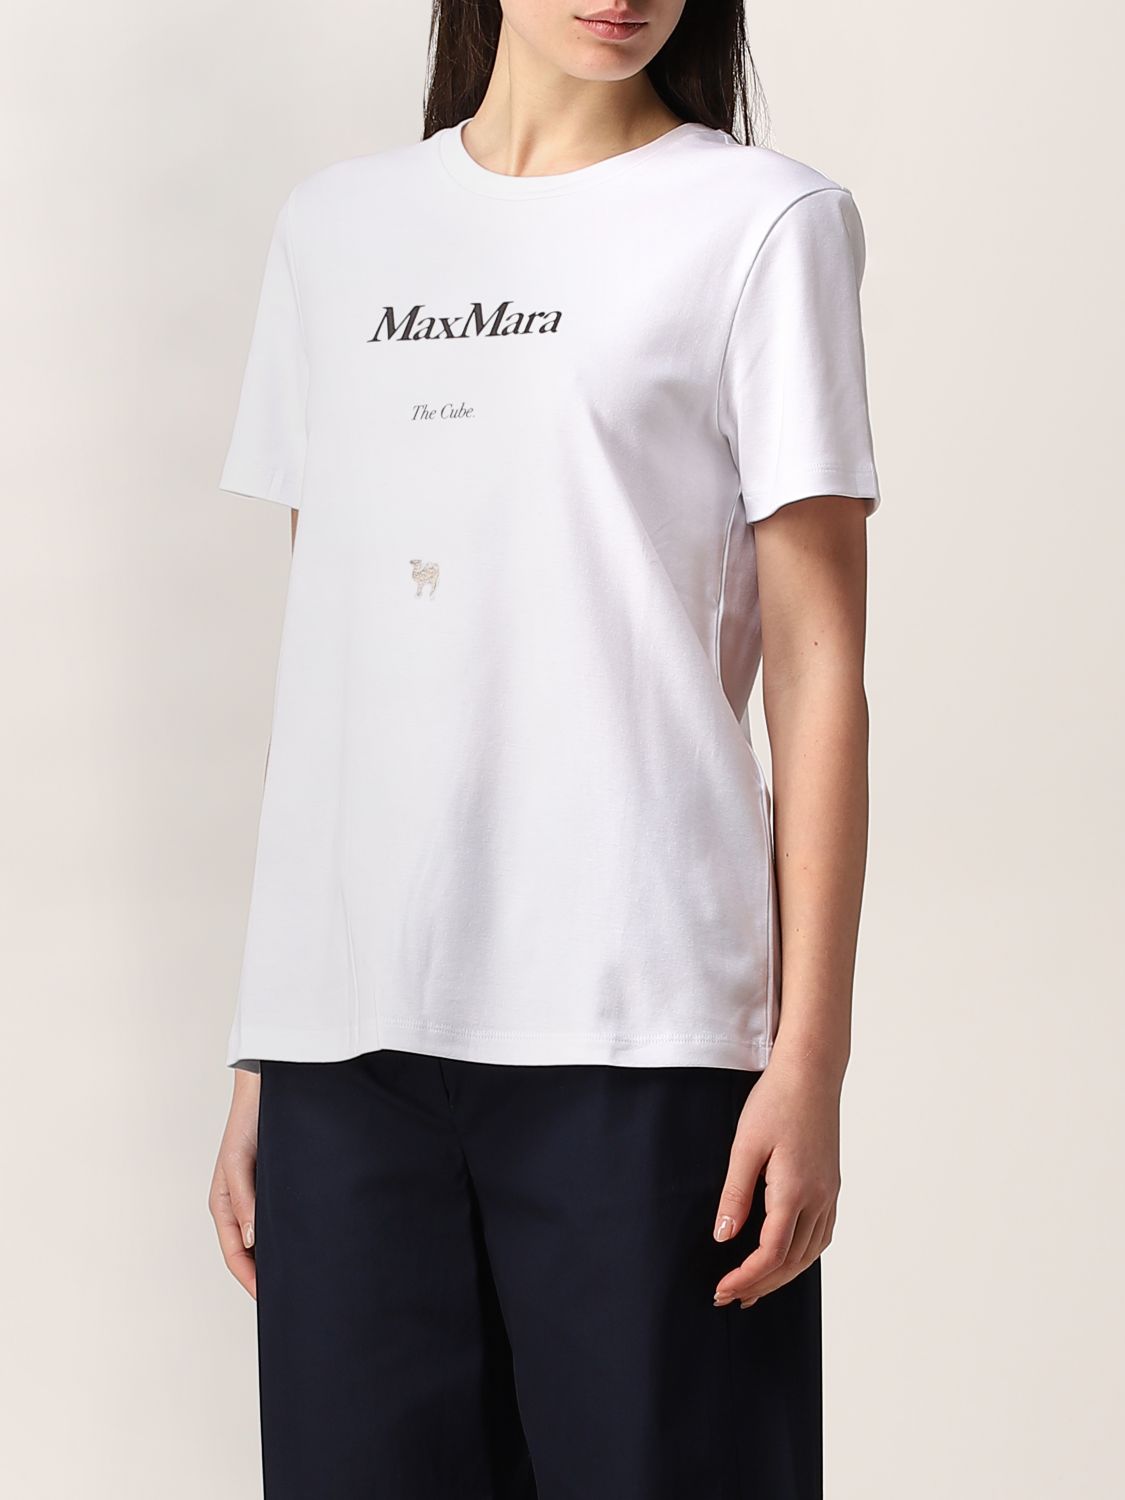 MAX MARA マックスマーラ Tシャツ S www.krzysztofbialy.com